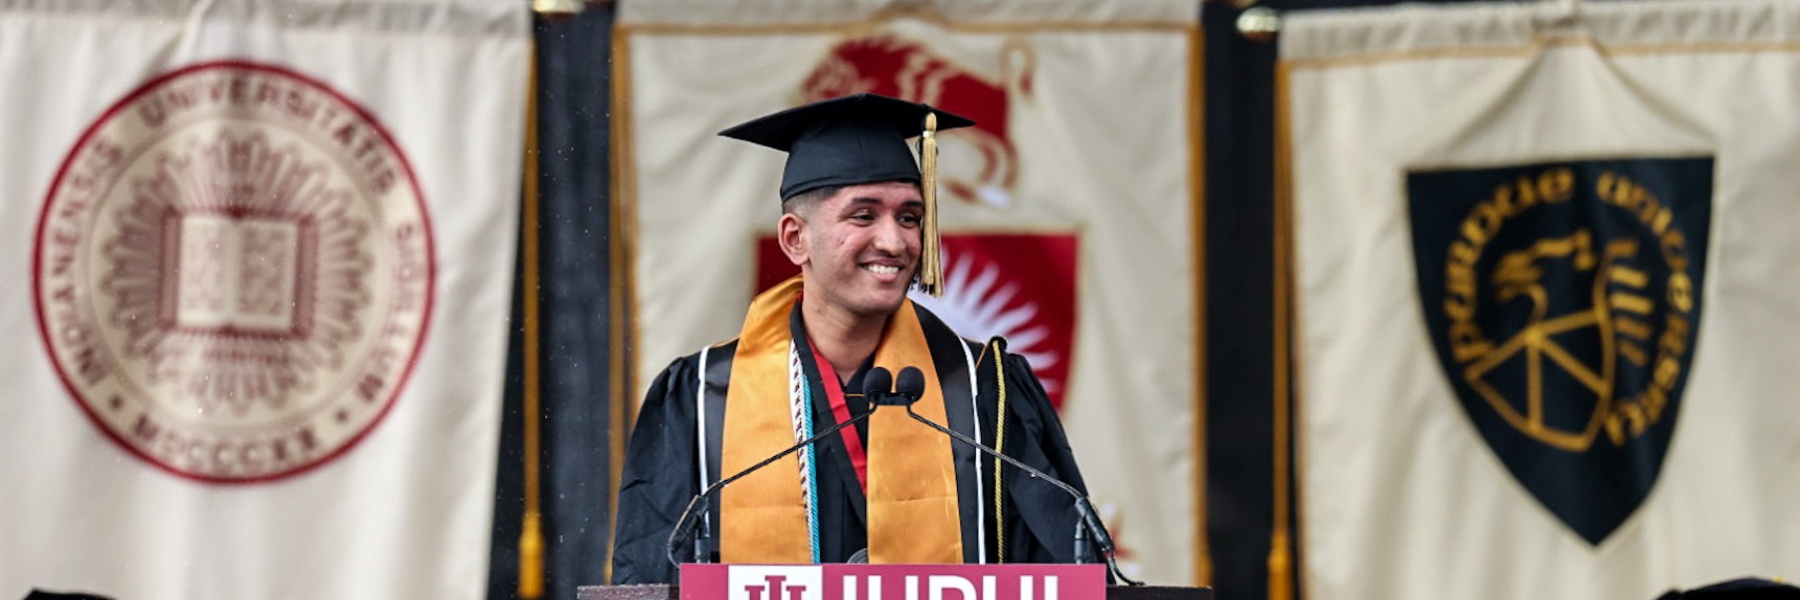 A graduating senior delivering a speech